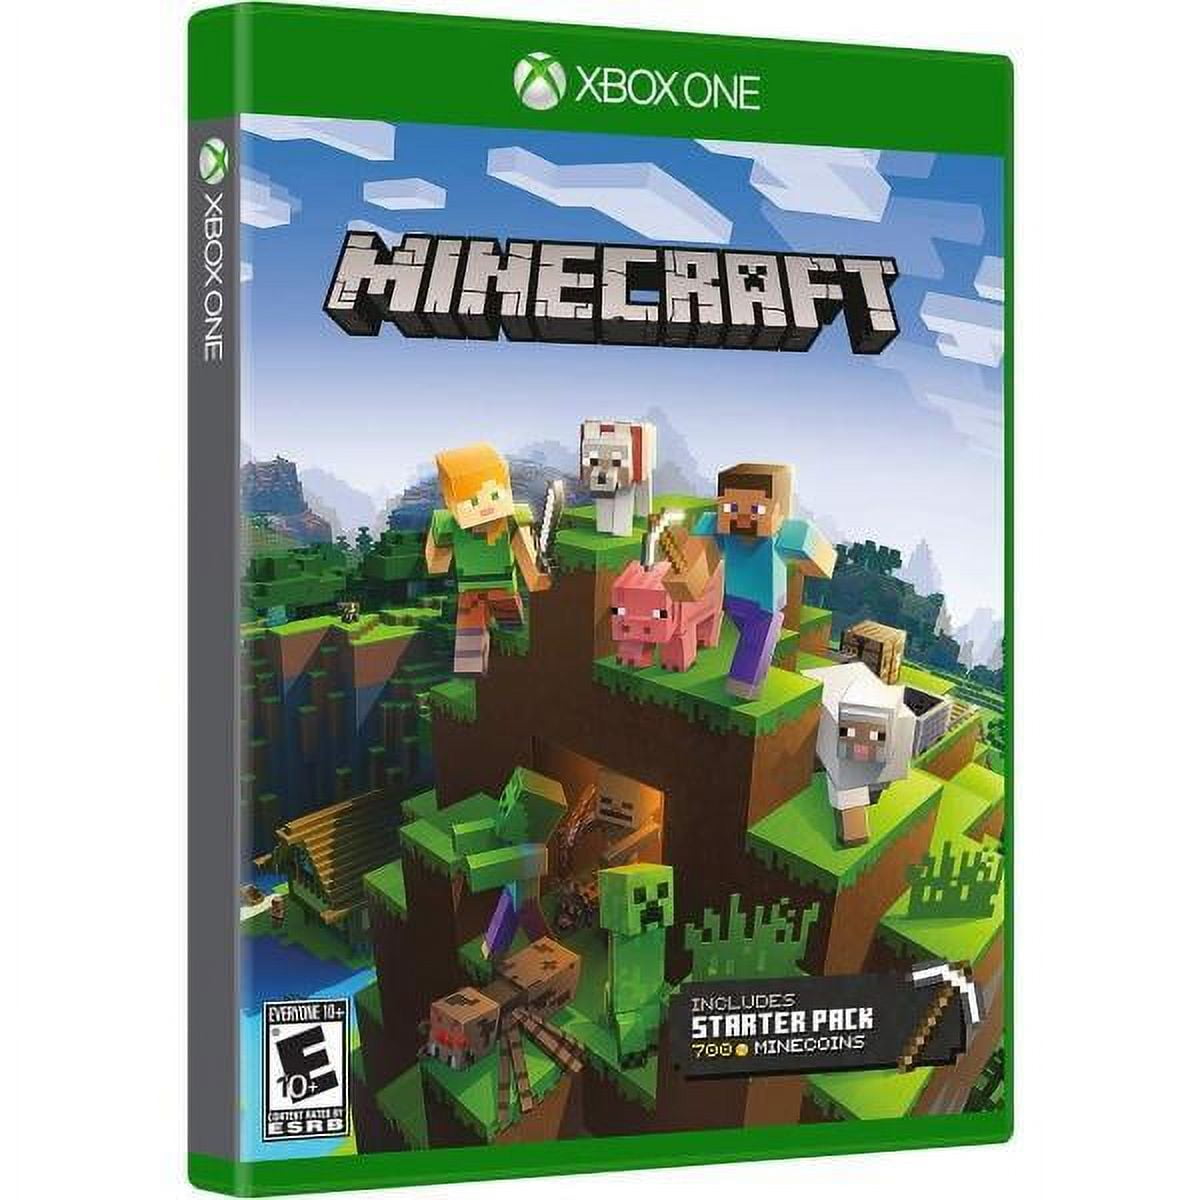 Happy Birthday, Minecraft: Xbox 360 Edition! Celebrate with Free